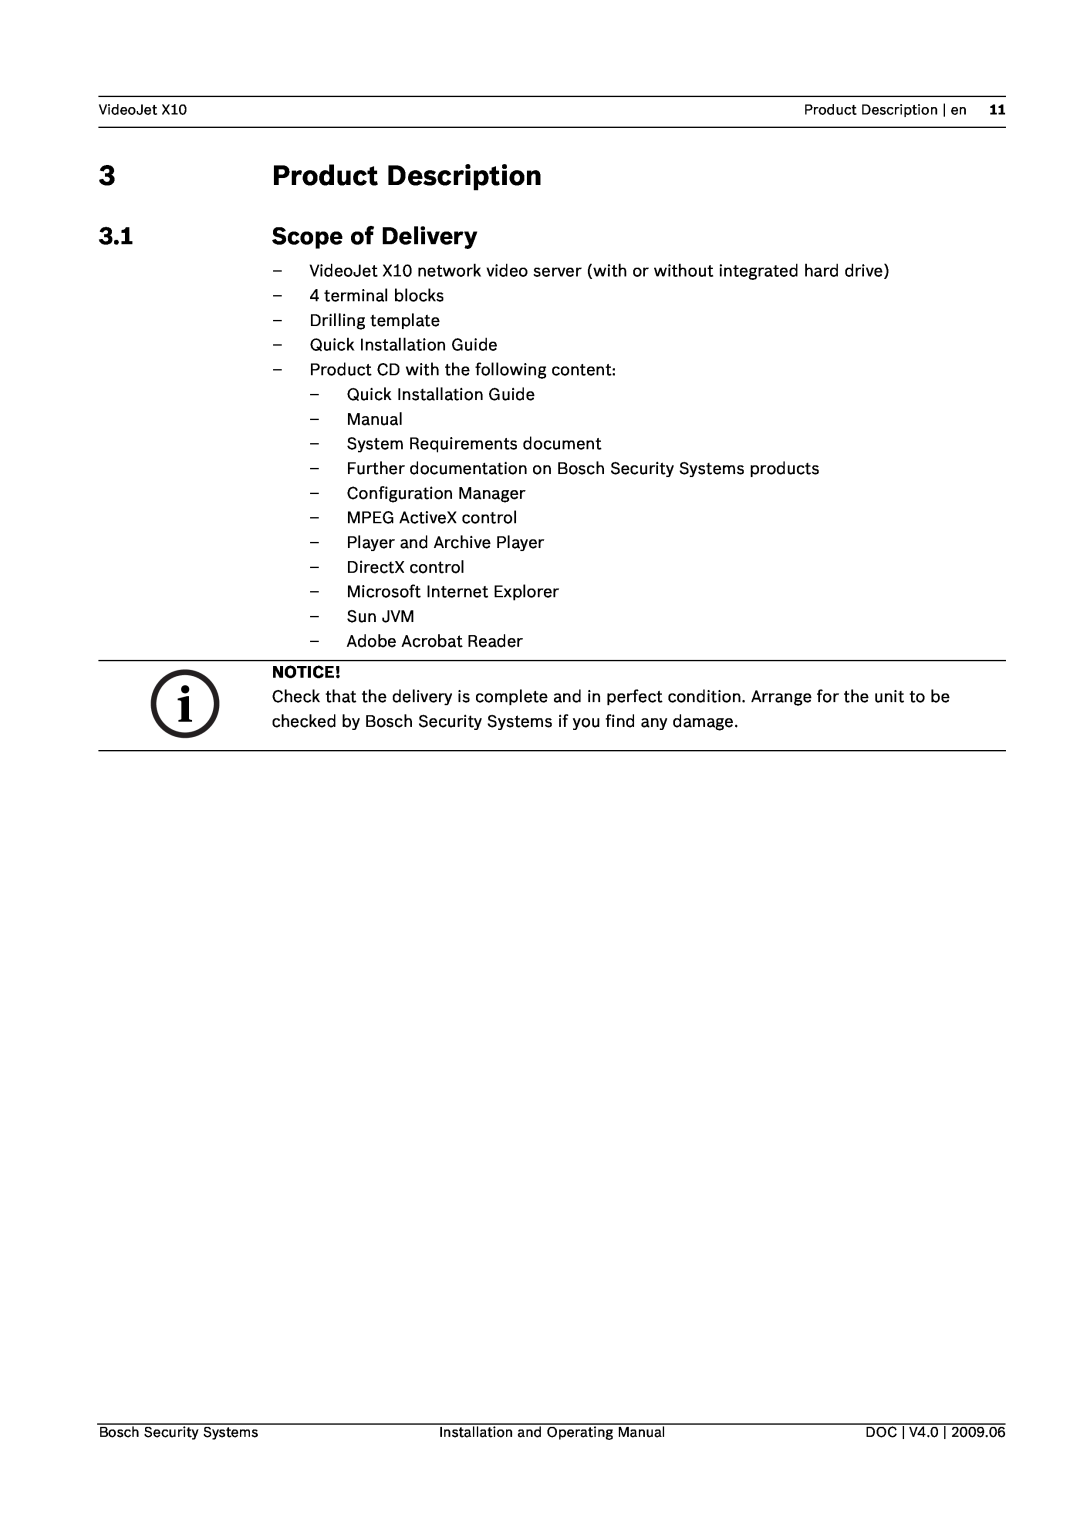 Bosch Appliances X10 manual Product Description, Scope of Delivery 